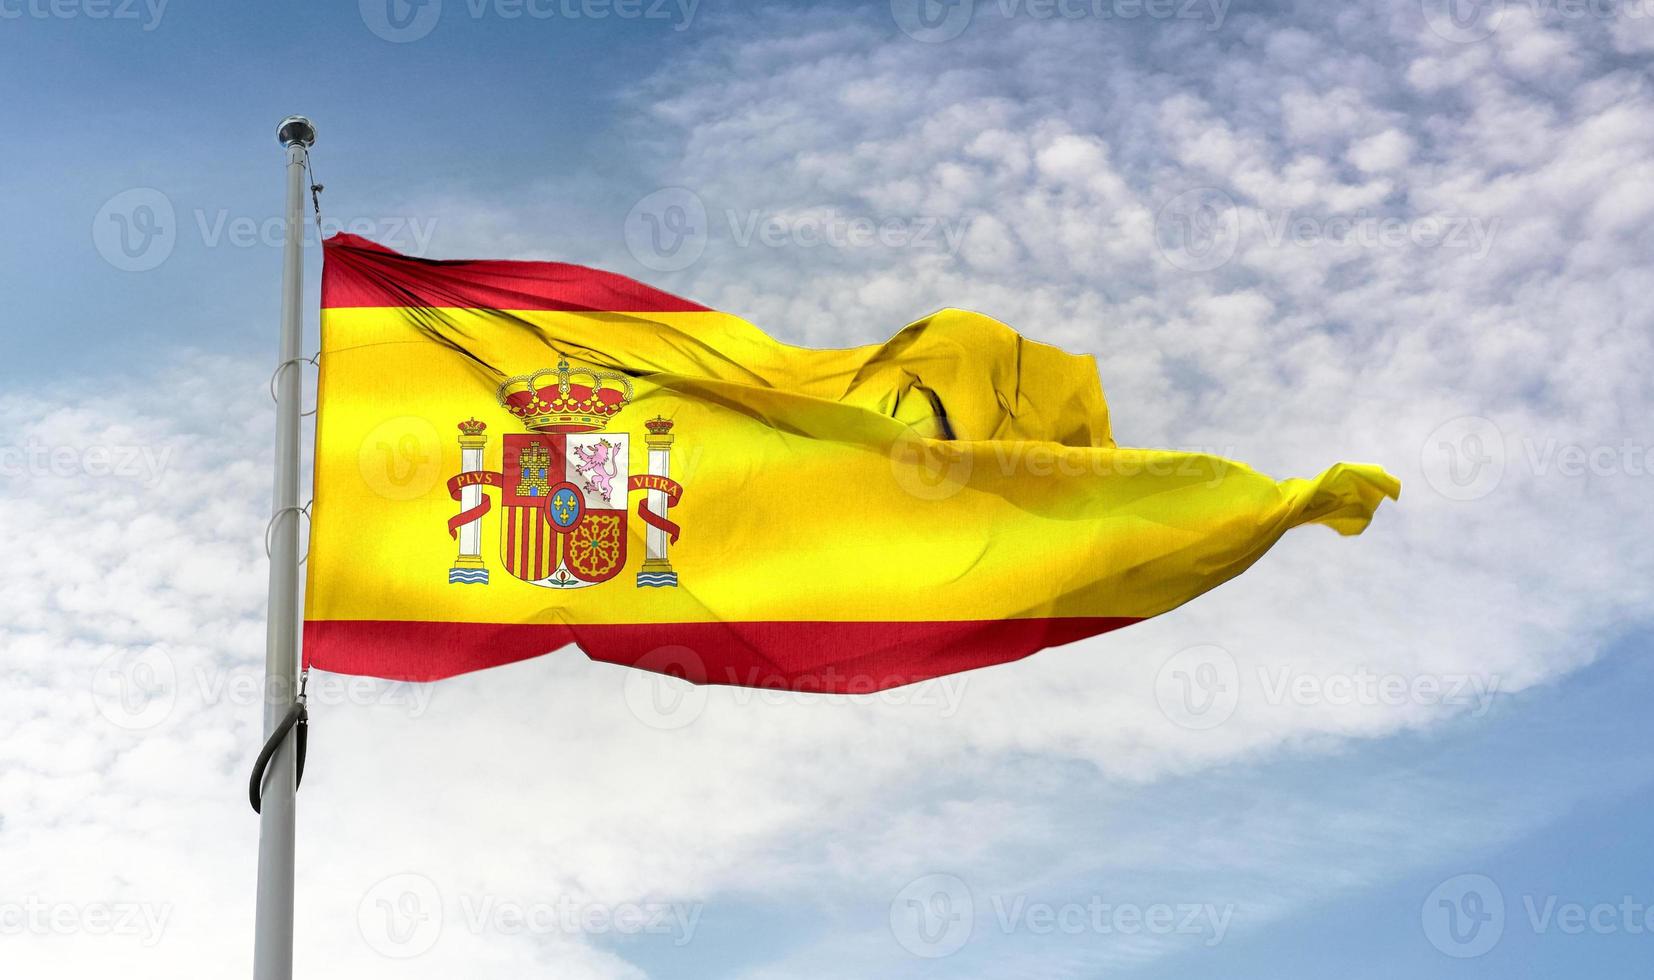 spaniens flagga - realistiskt viftande tygflagga foto